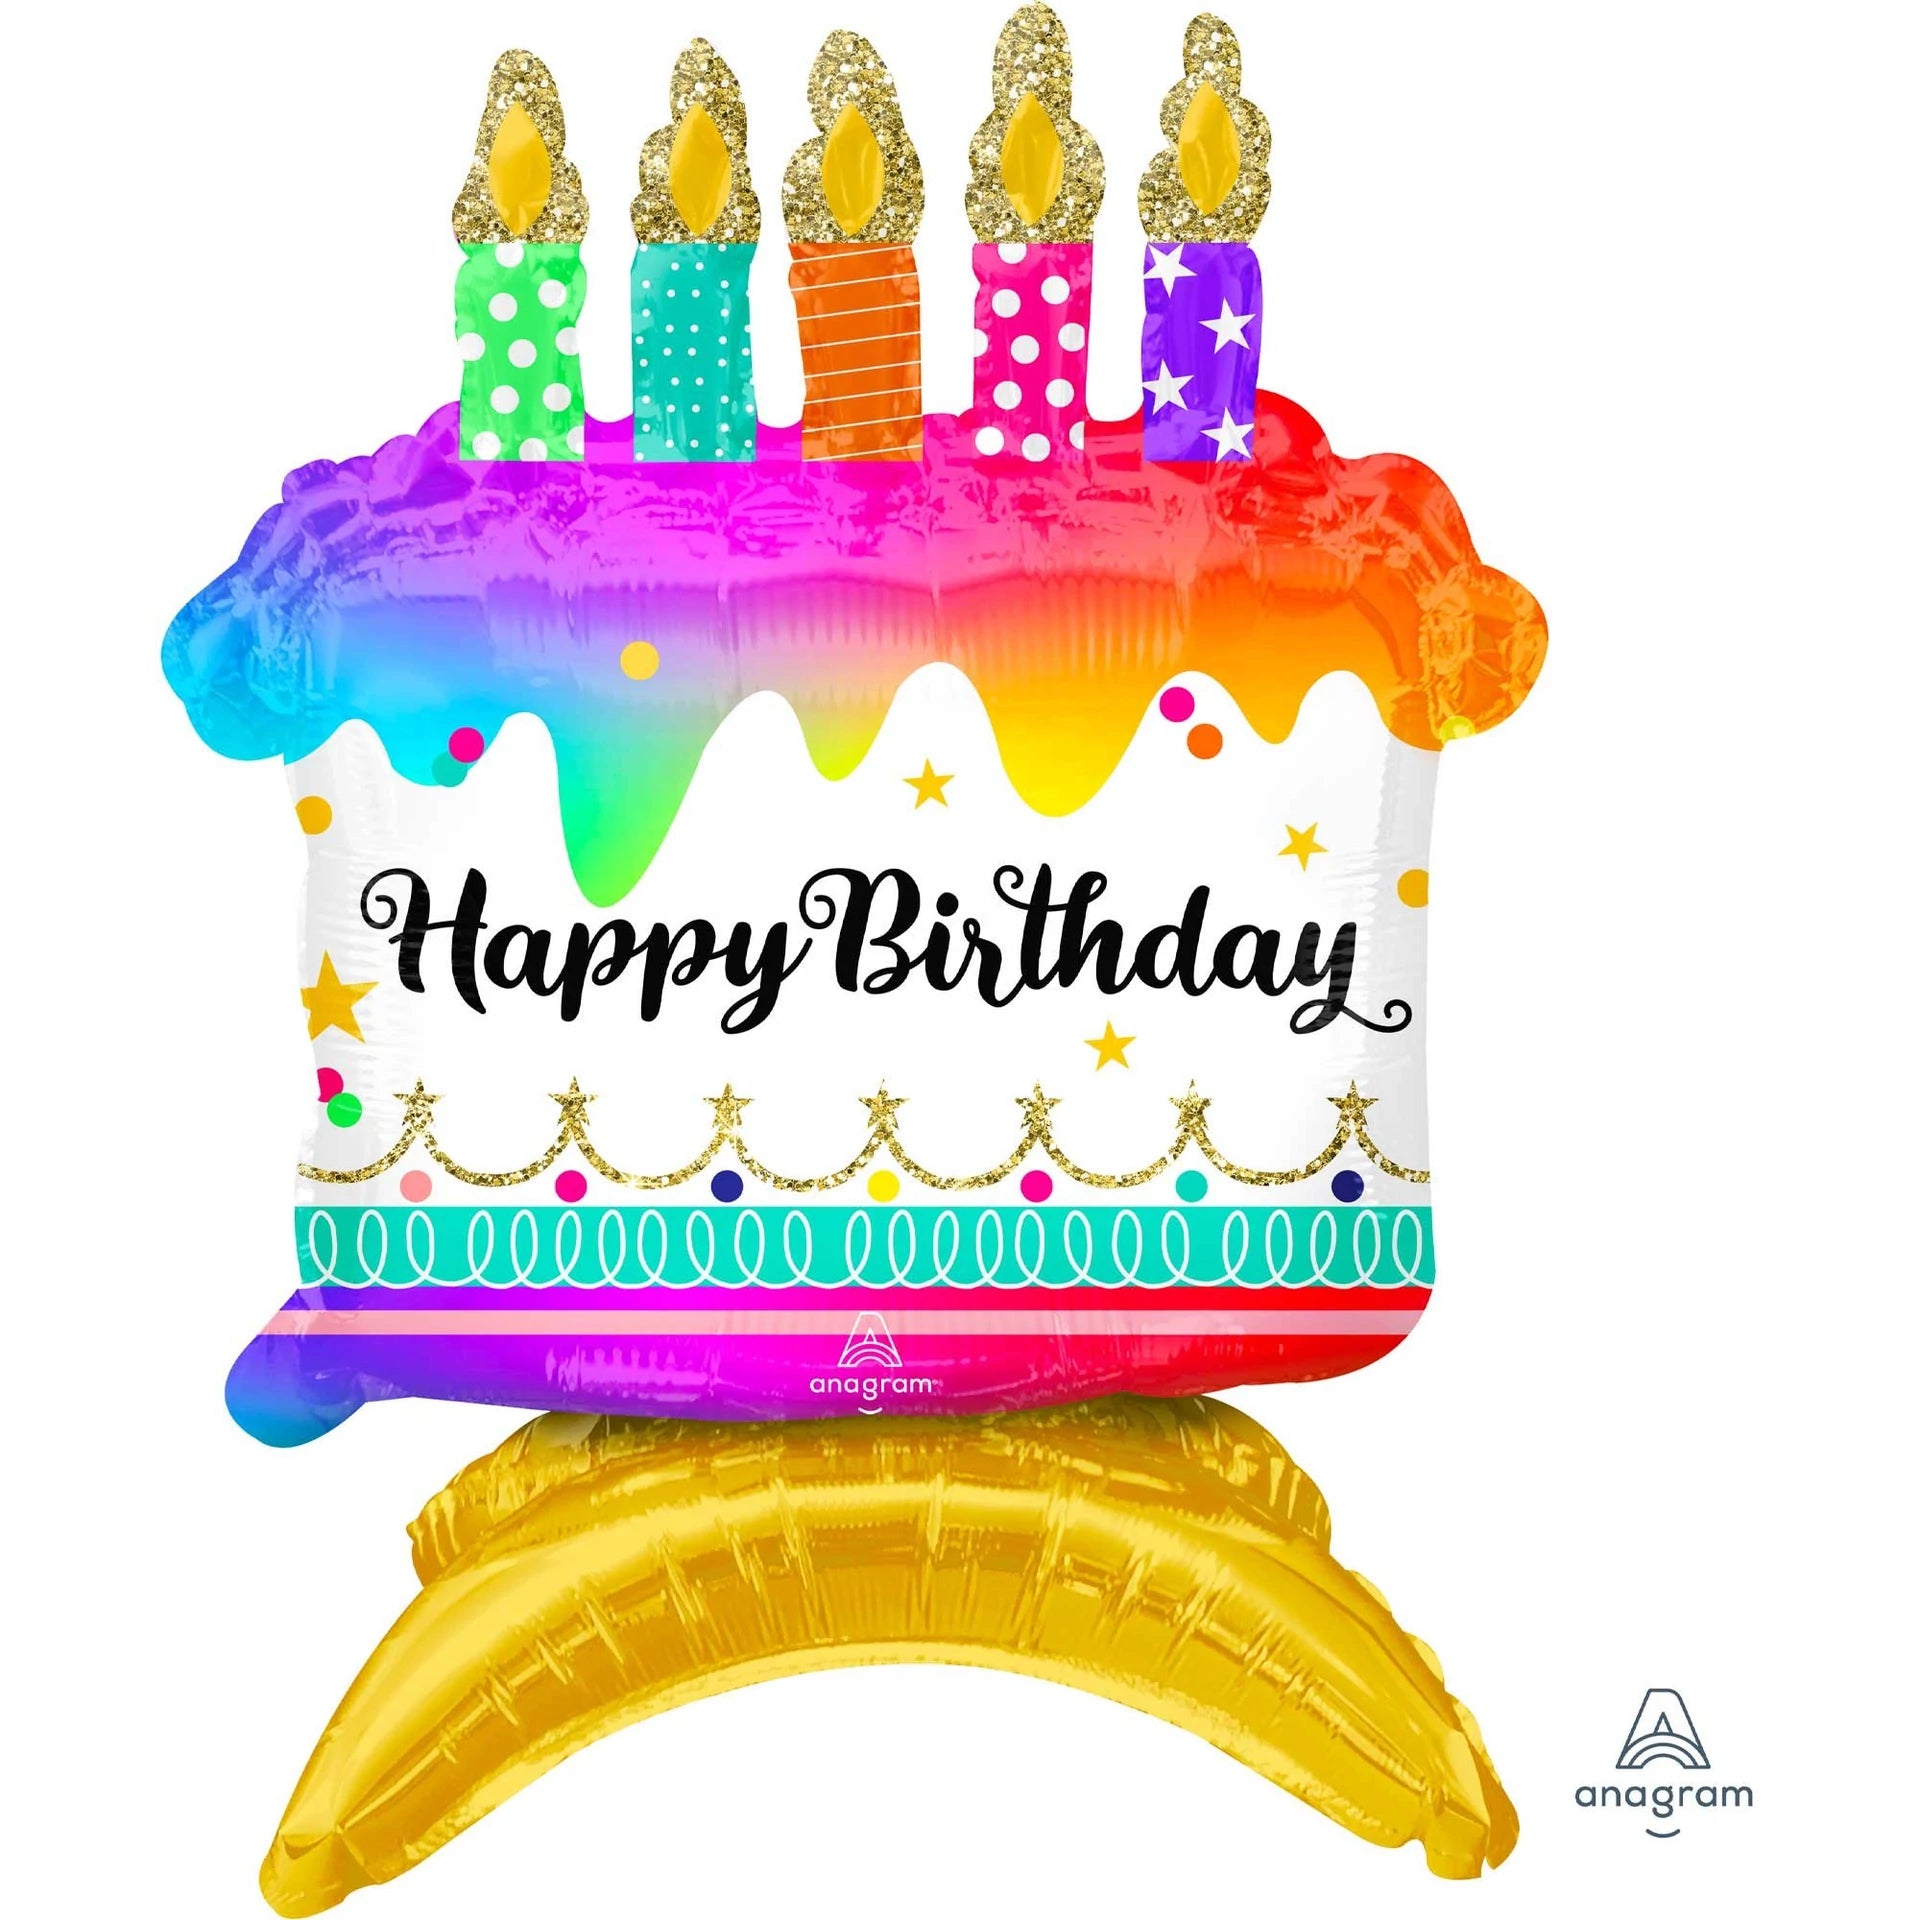 Happy Birthday Cake Centerpiece 4253911